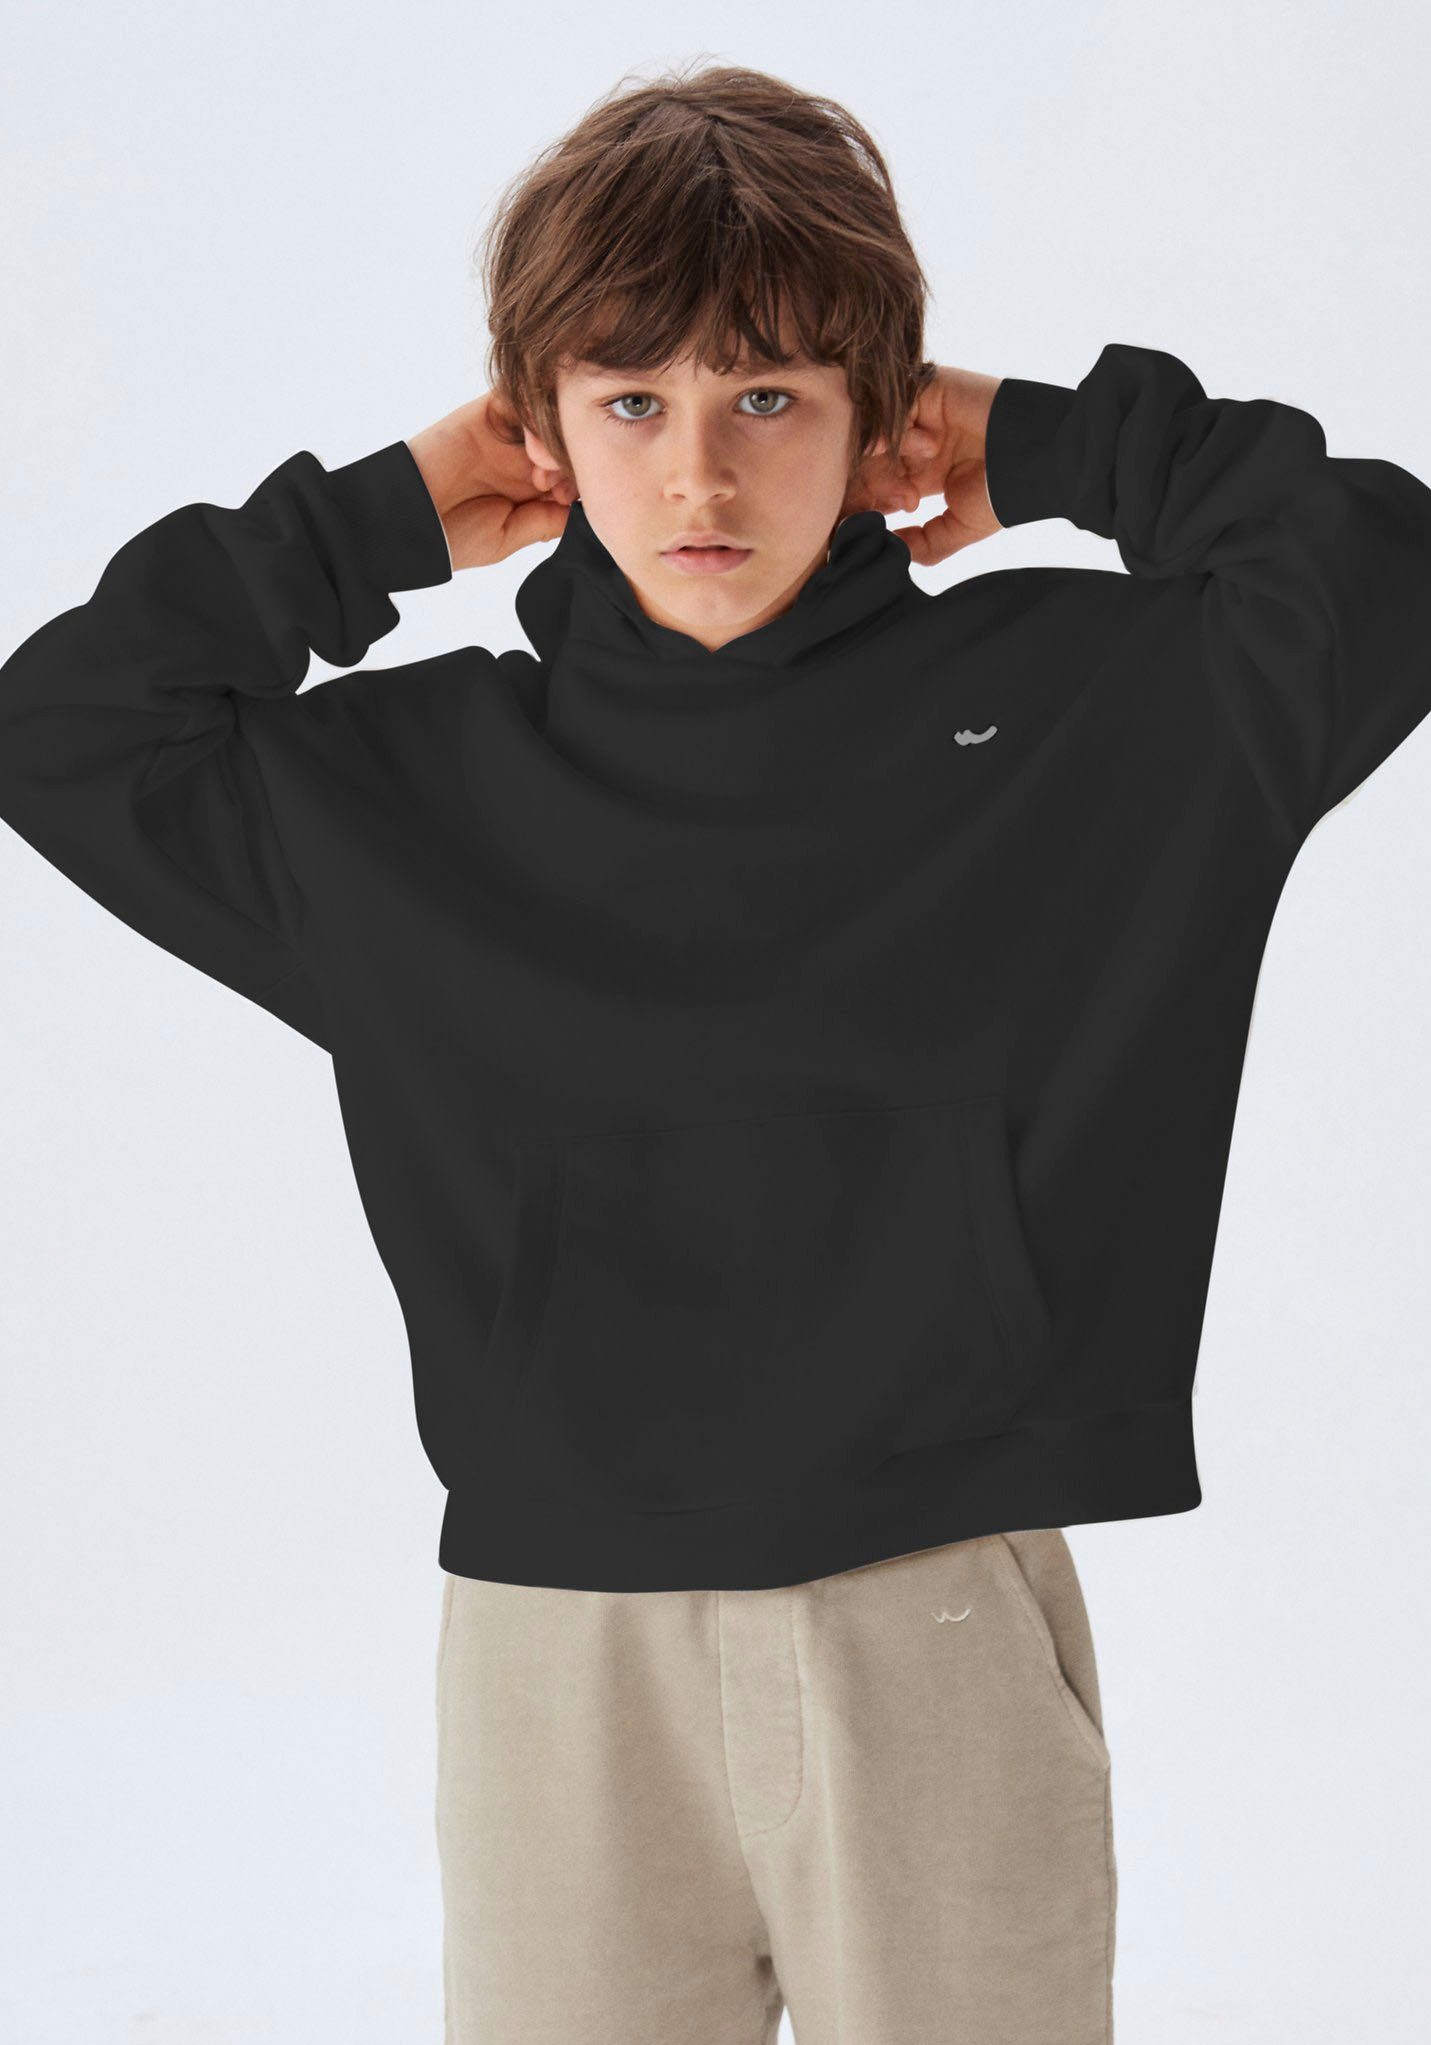 LTB TOHOCO black Sweatshirt